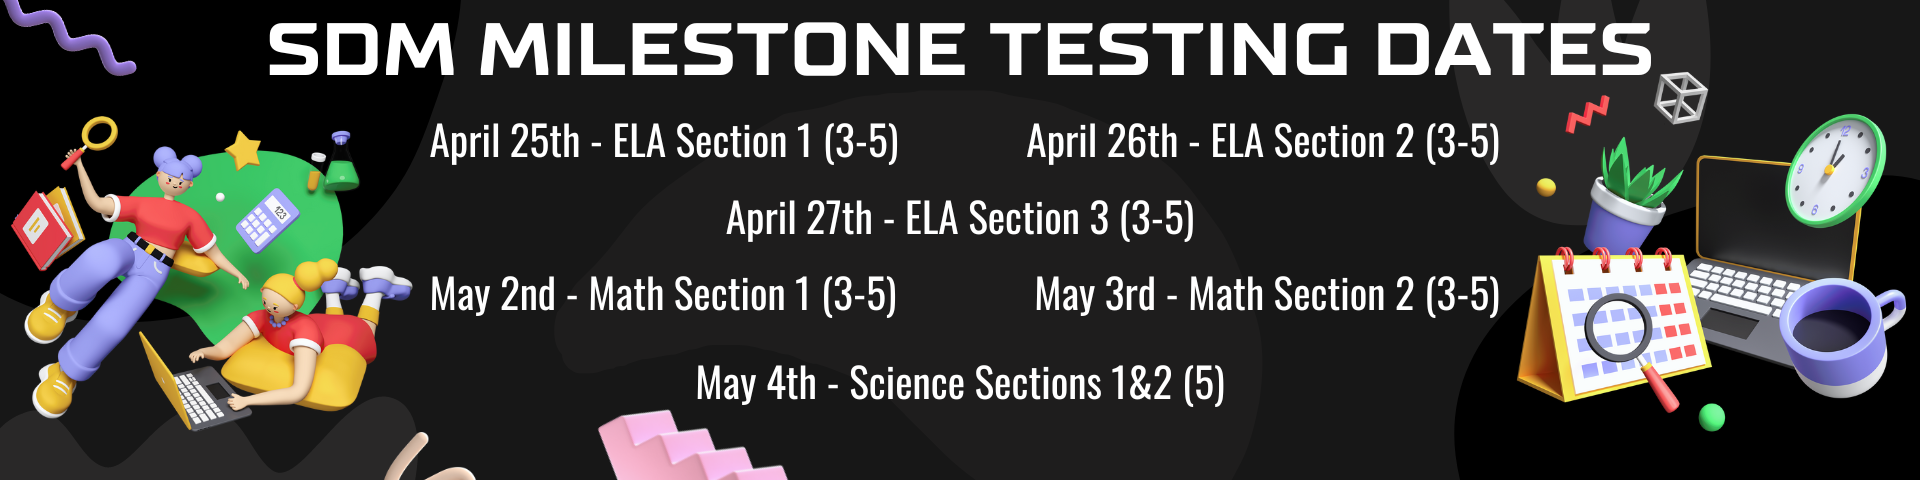 Milestone Testing Dates